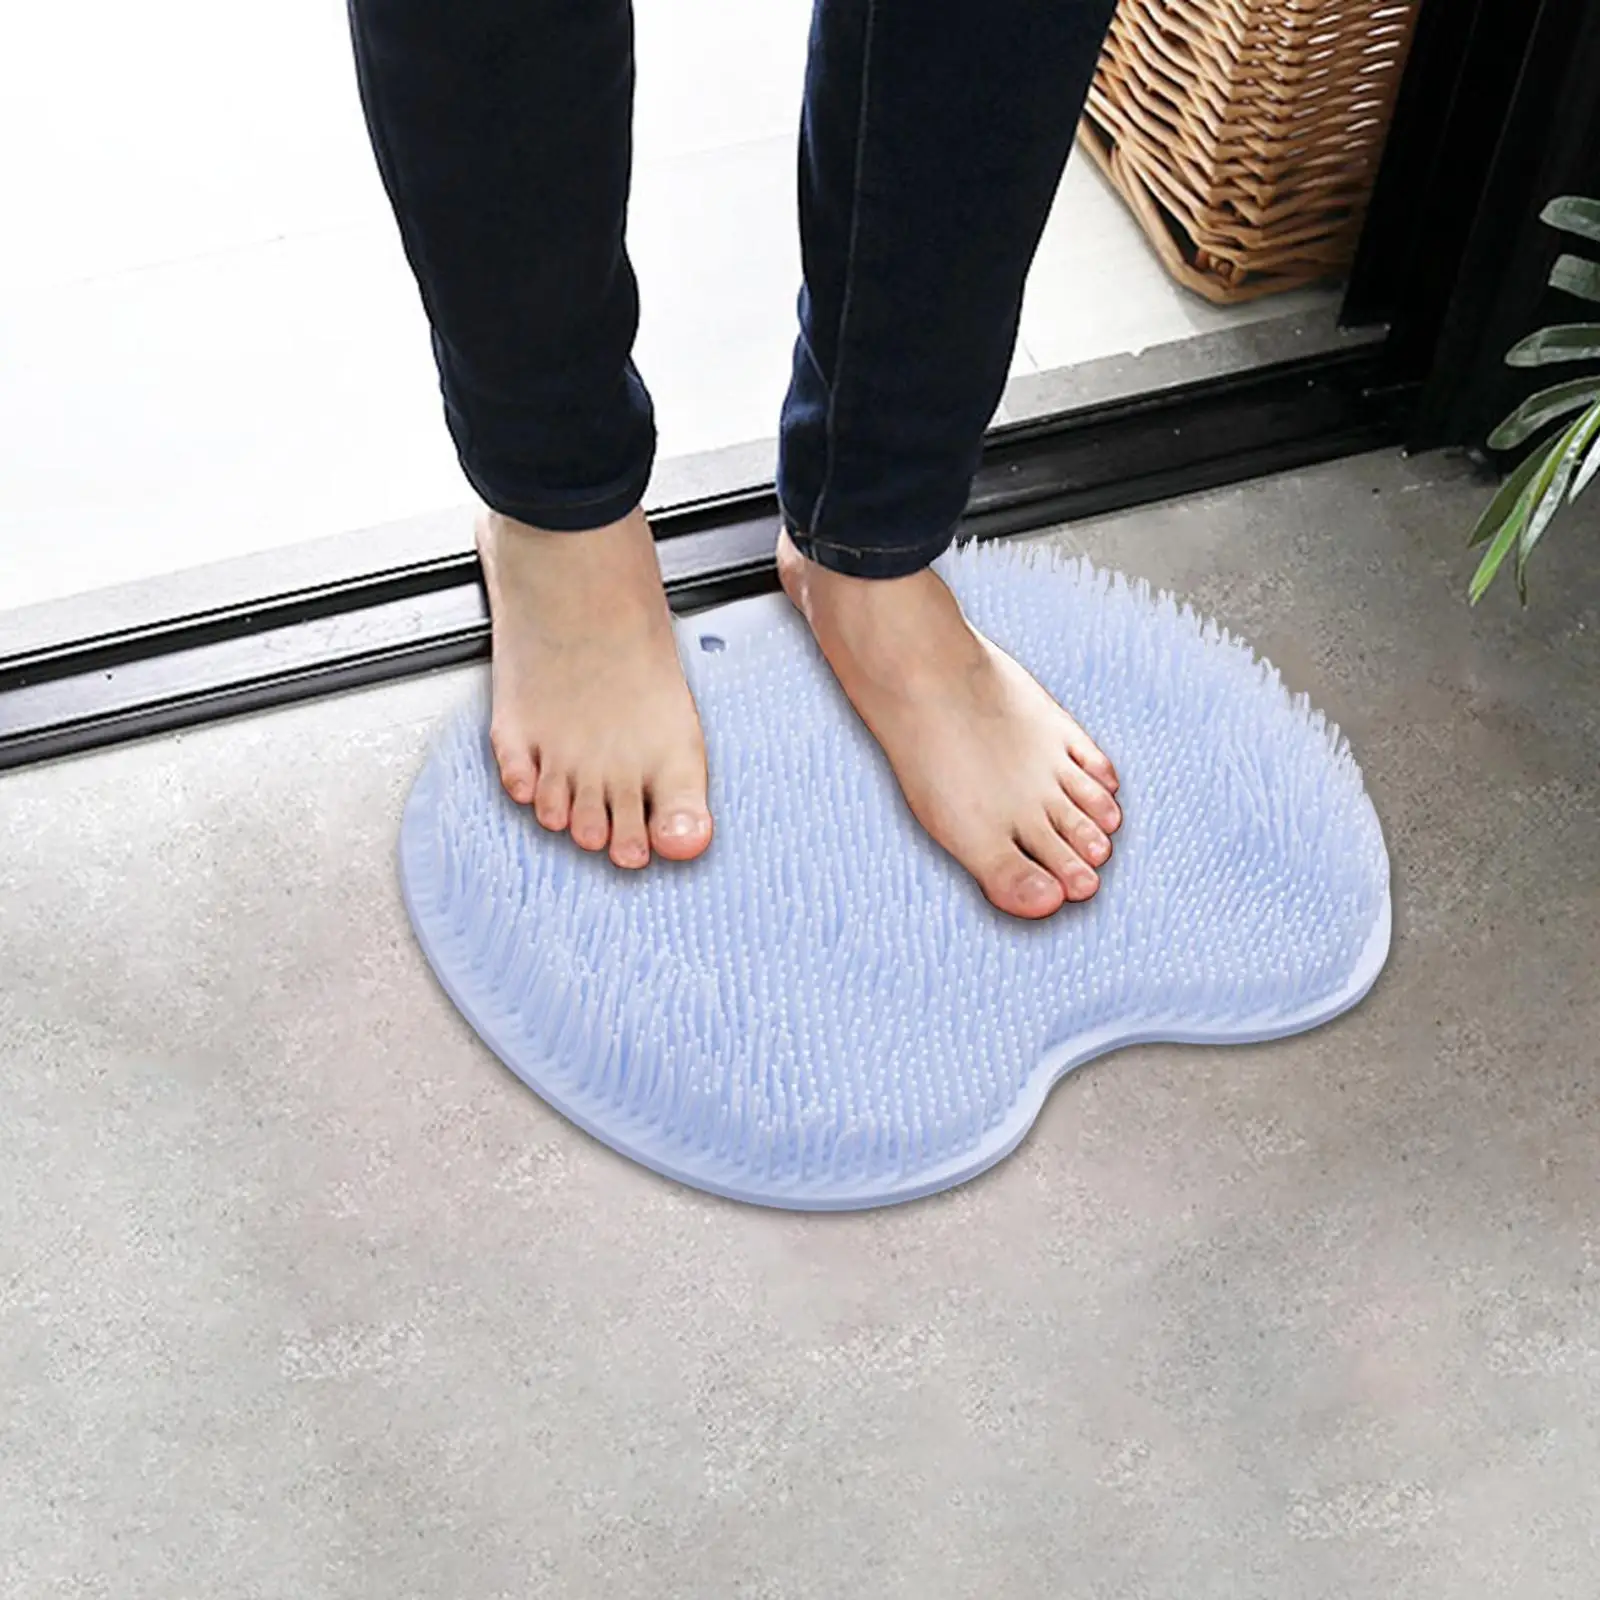 Multipurpose Shower Foot Scrubber Mat Foot Cleaner Durable Foot Tub Bath Mat for Feet Clean Bathroom Accessories Home SPA